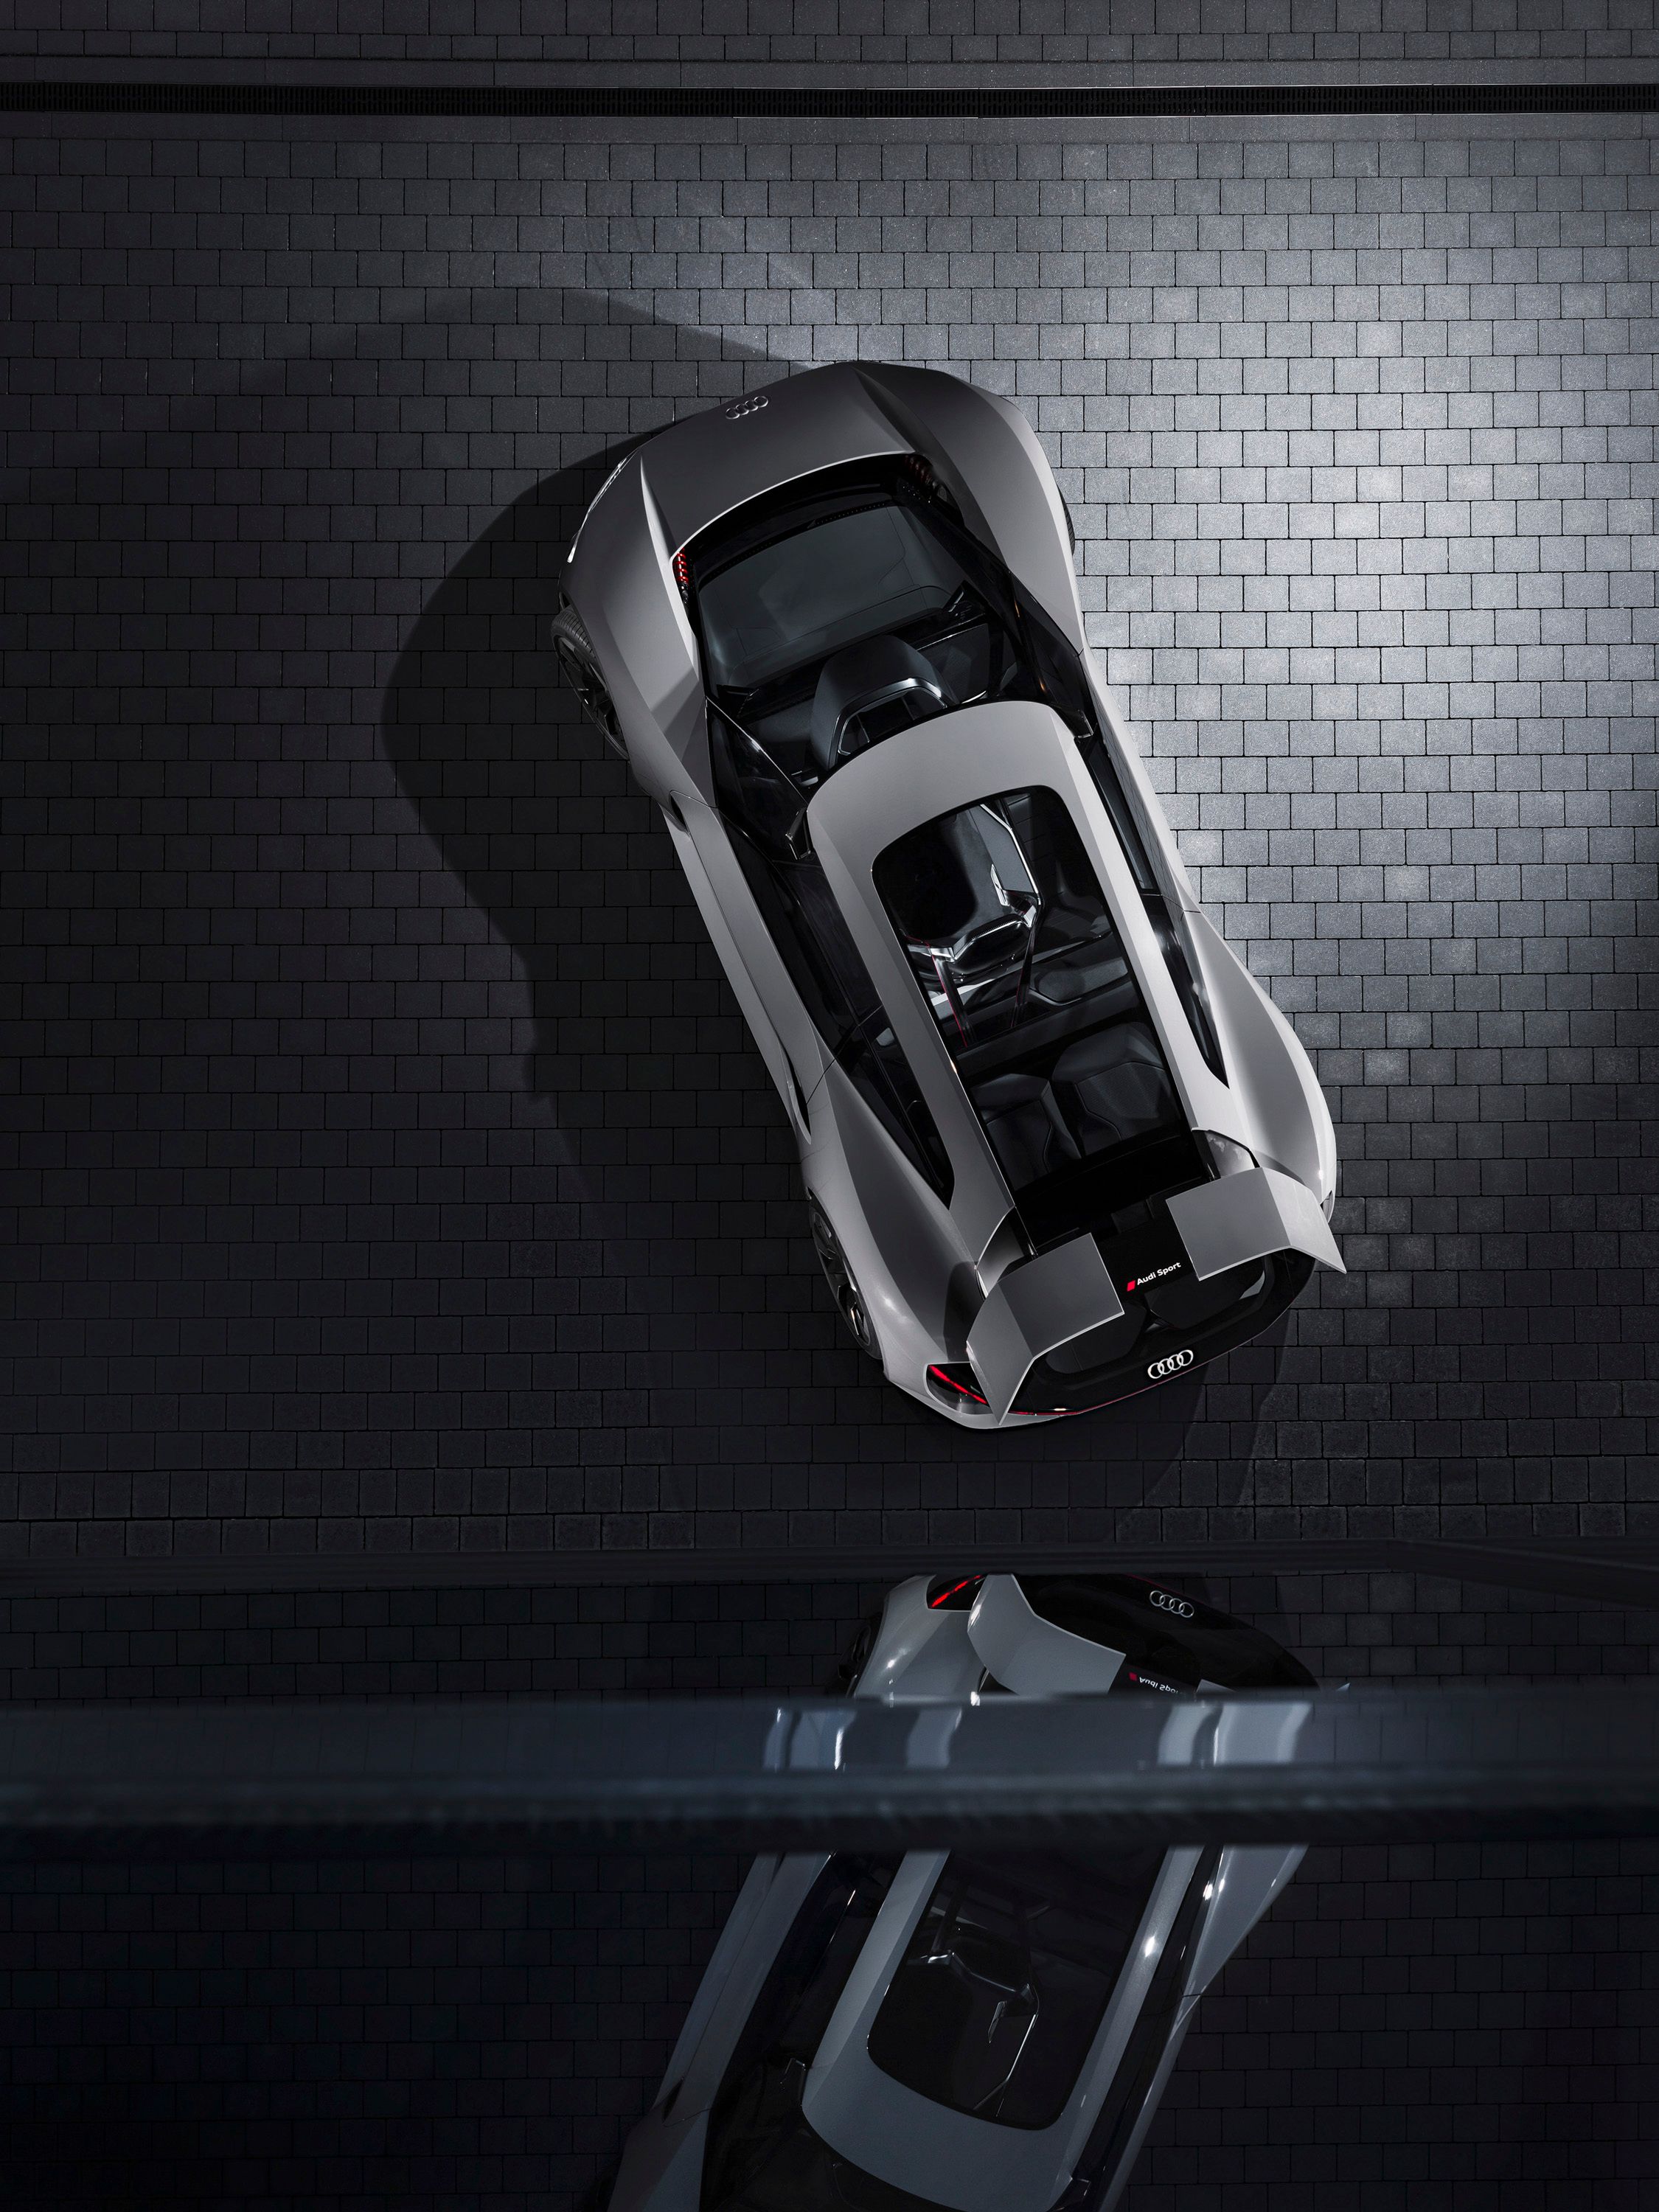 2018 Audi PB18 e-tron Concept